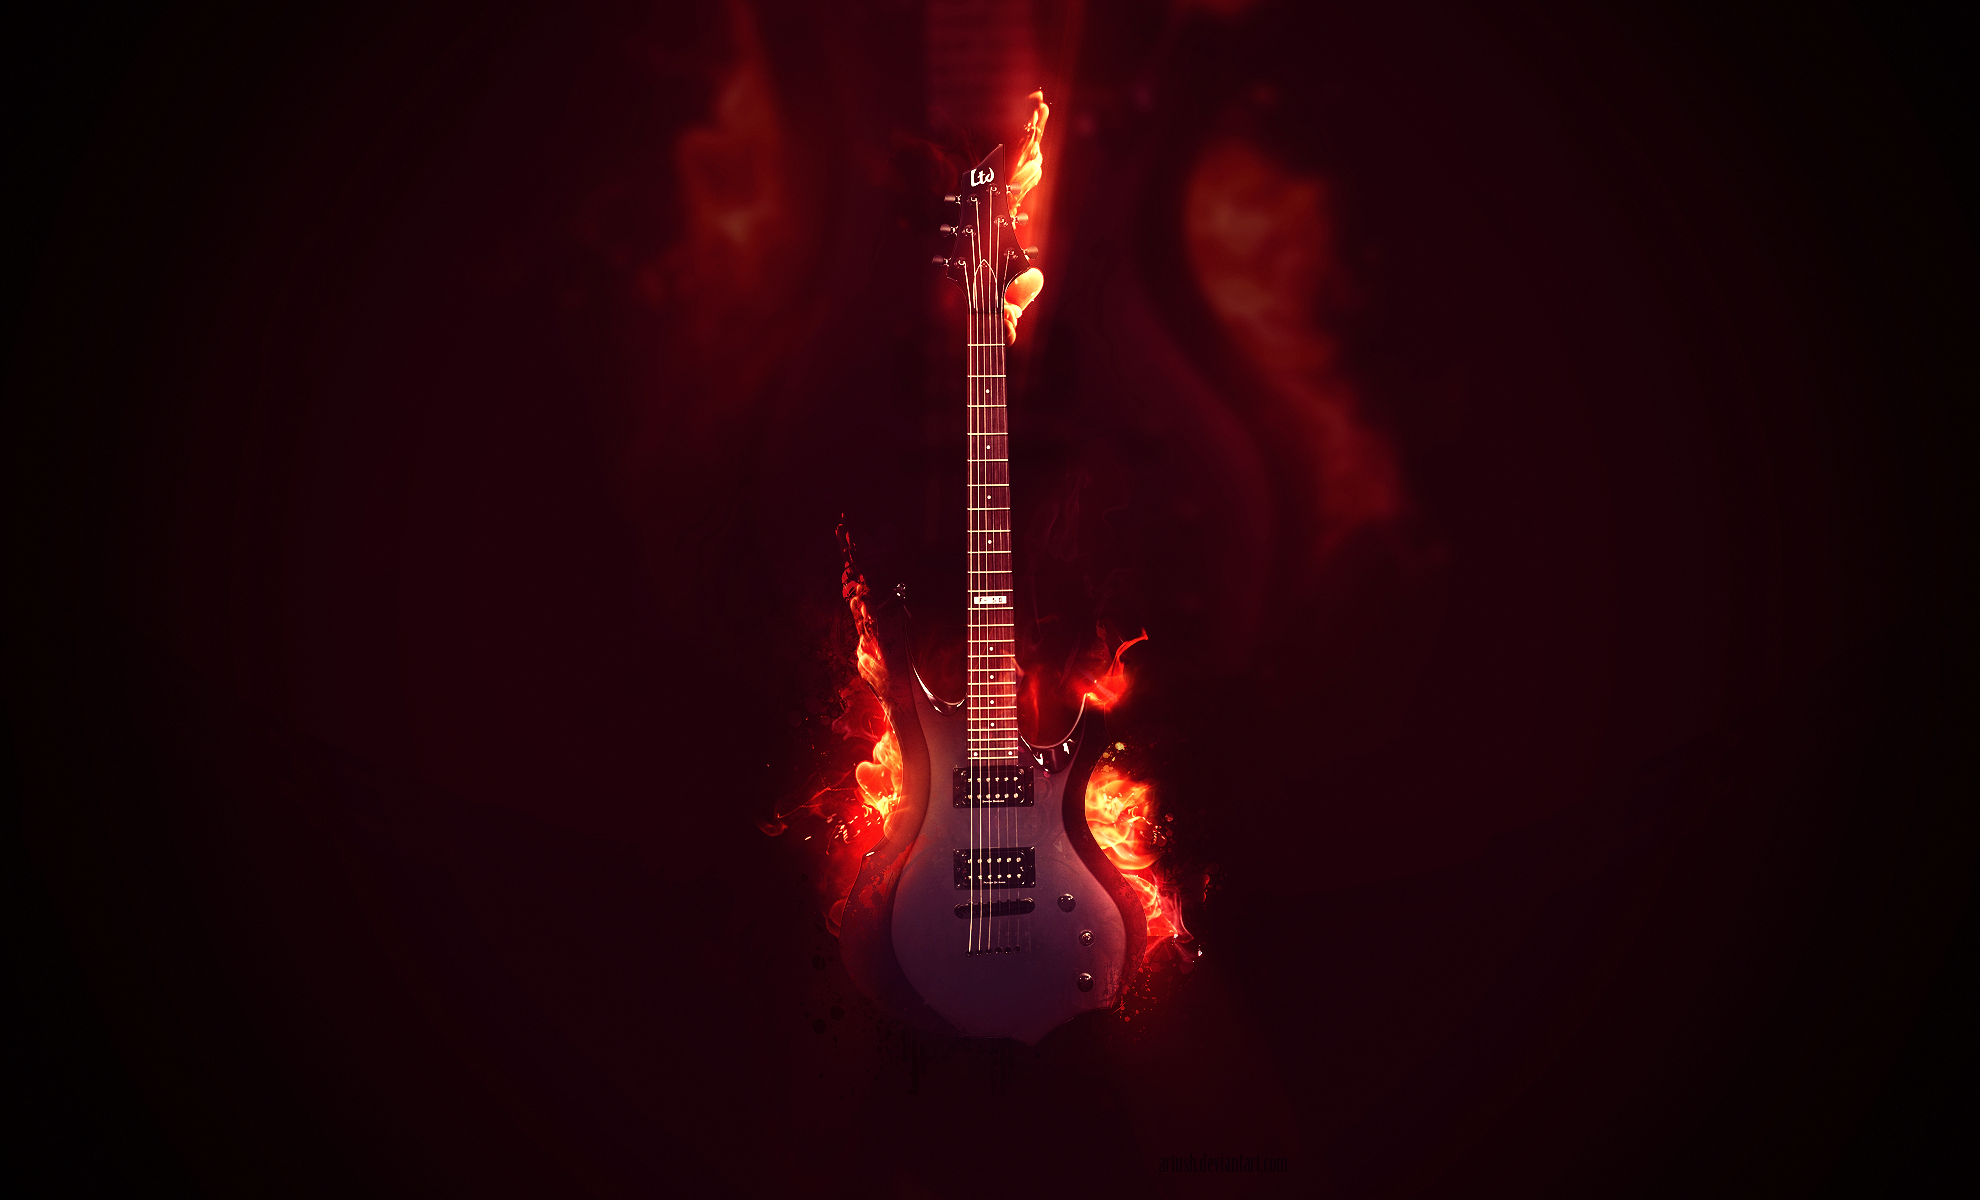 guitar wallpaper for mac desktop. Mac desktop, Wallpaper, Fire